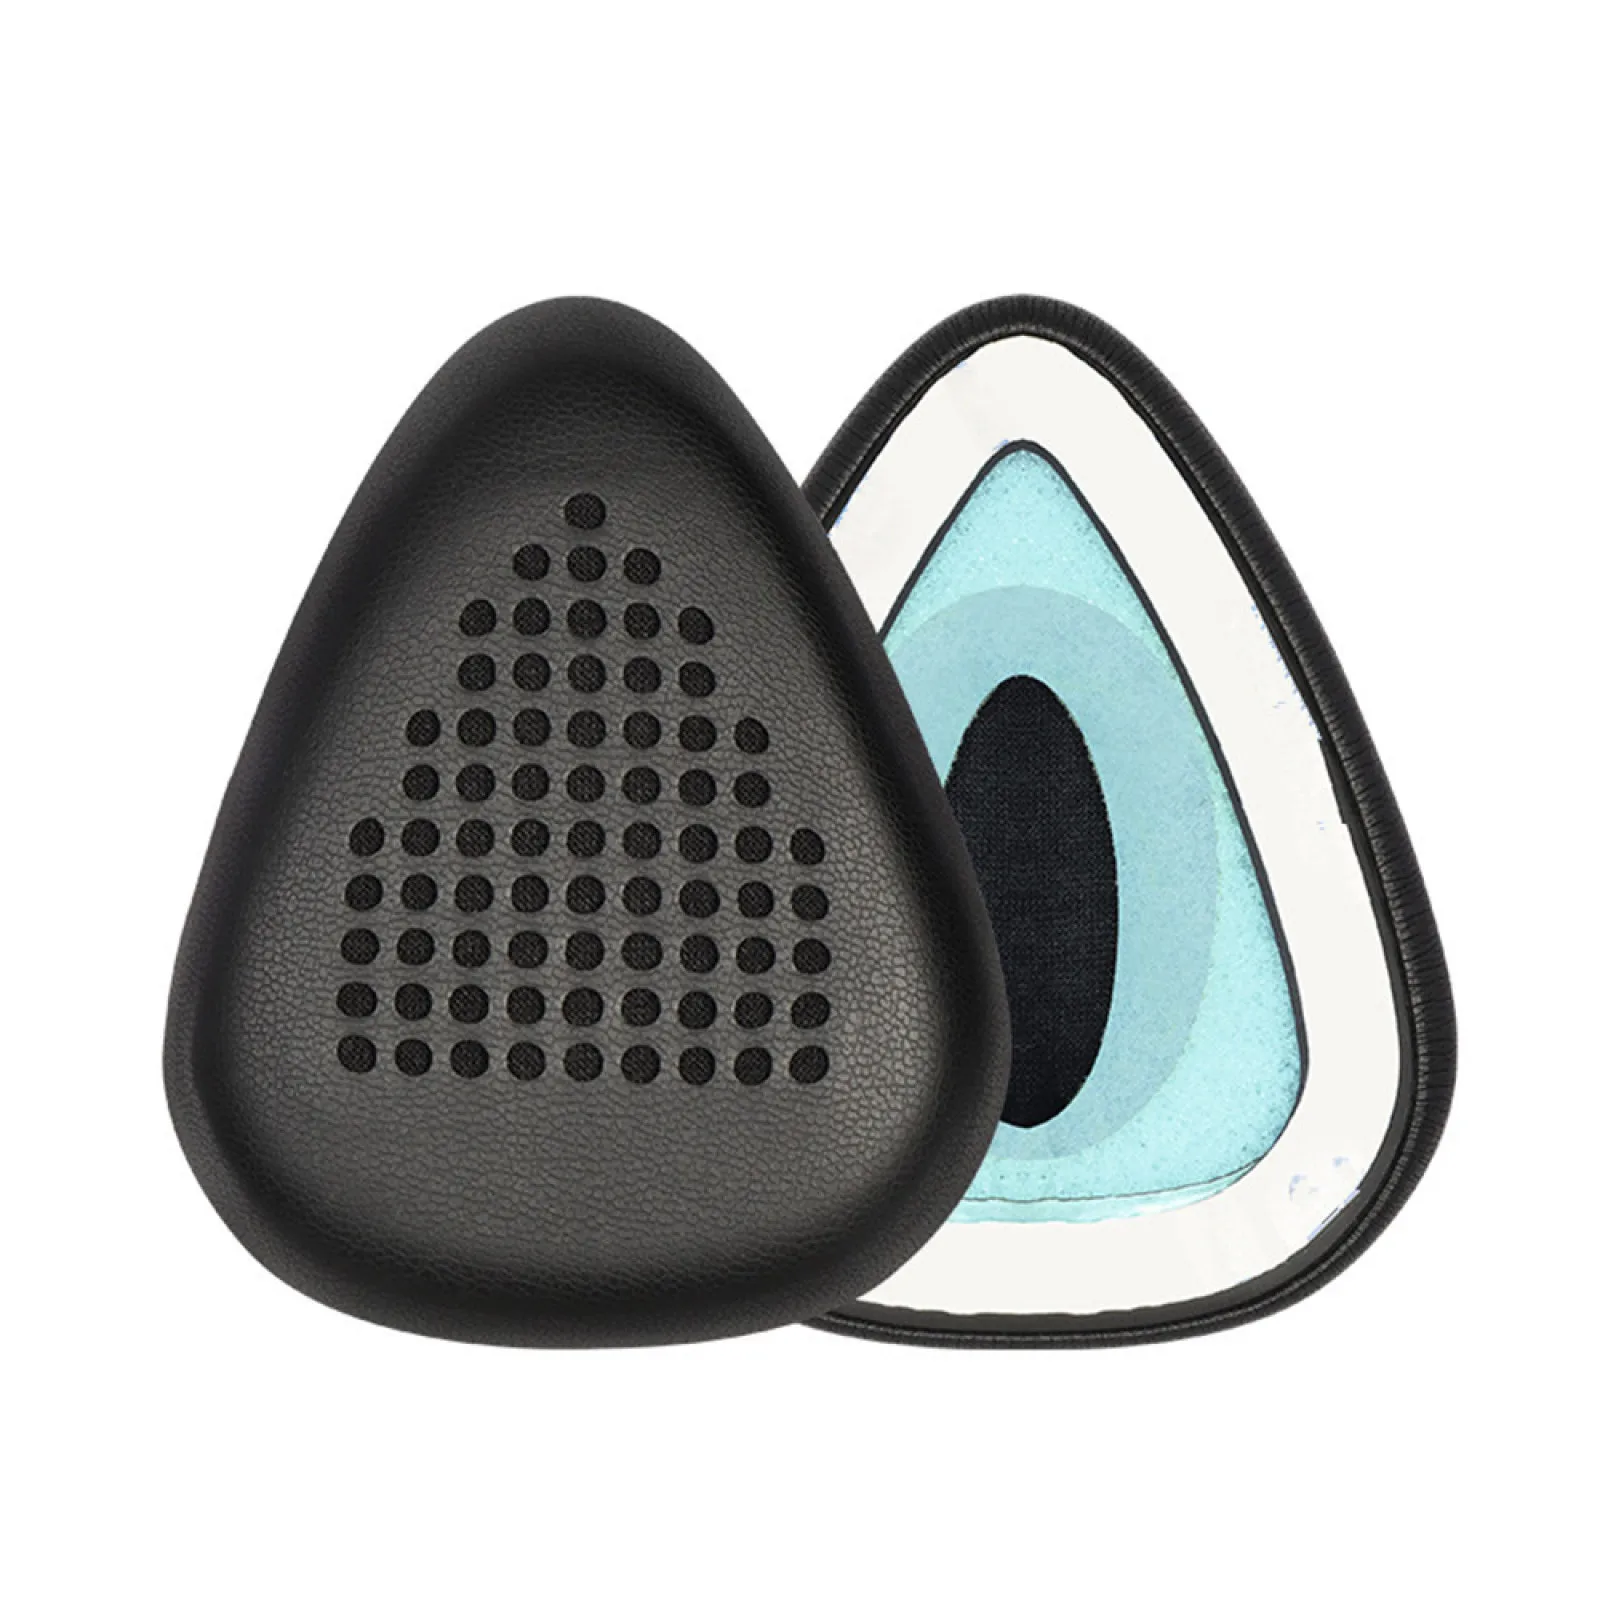 1 Pair Replacement Soft Sponge Ear Pads Headsets Cushion Covers For Razer Dva Meka Headphones Accessories Repair Parts Earmuffs